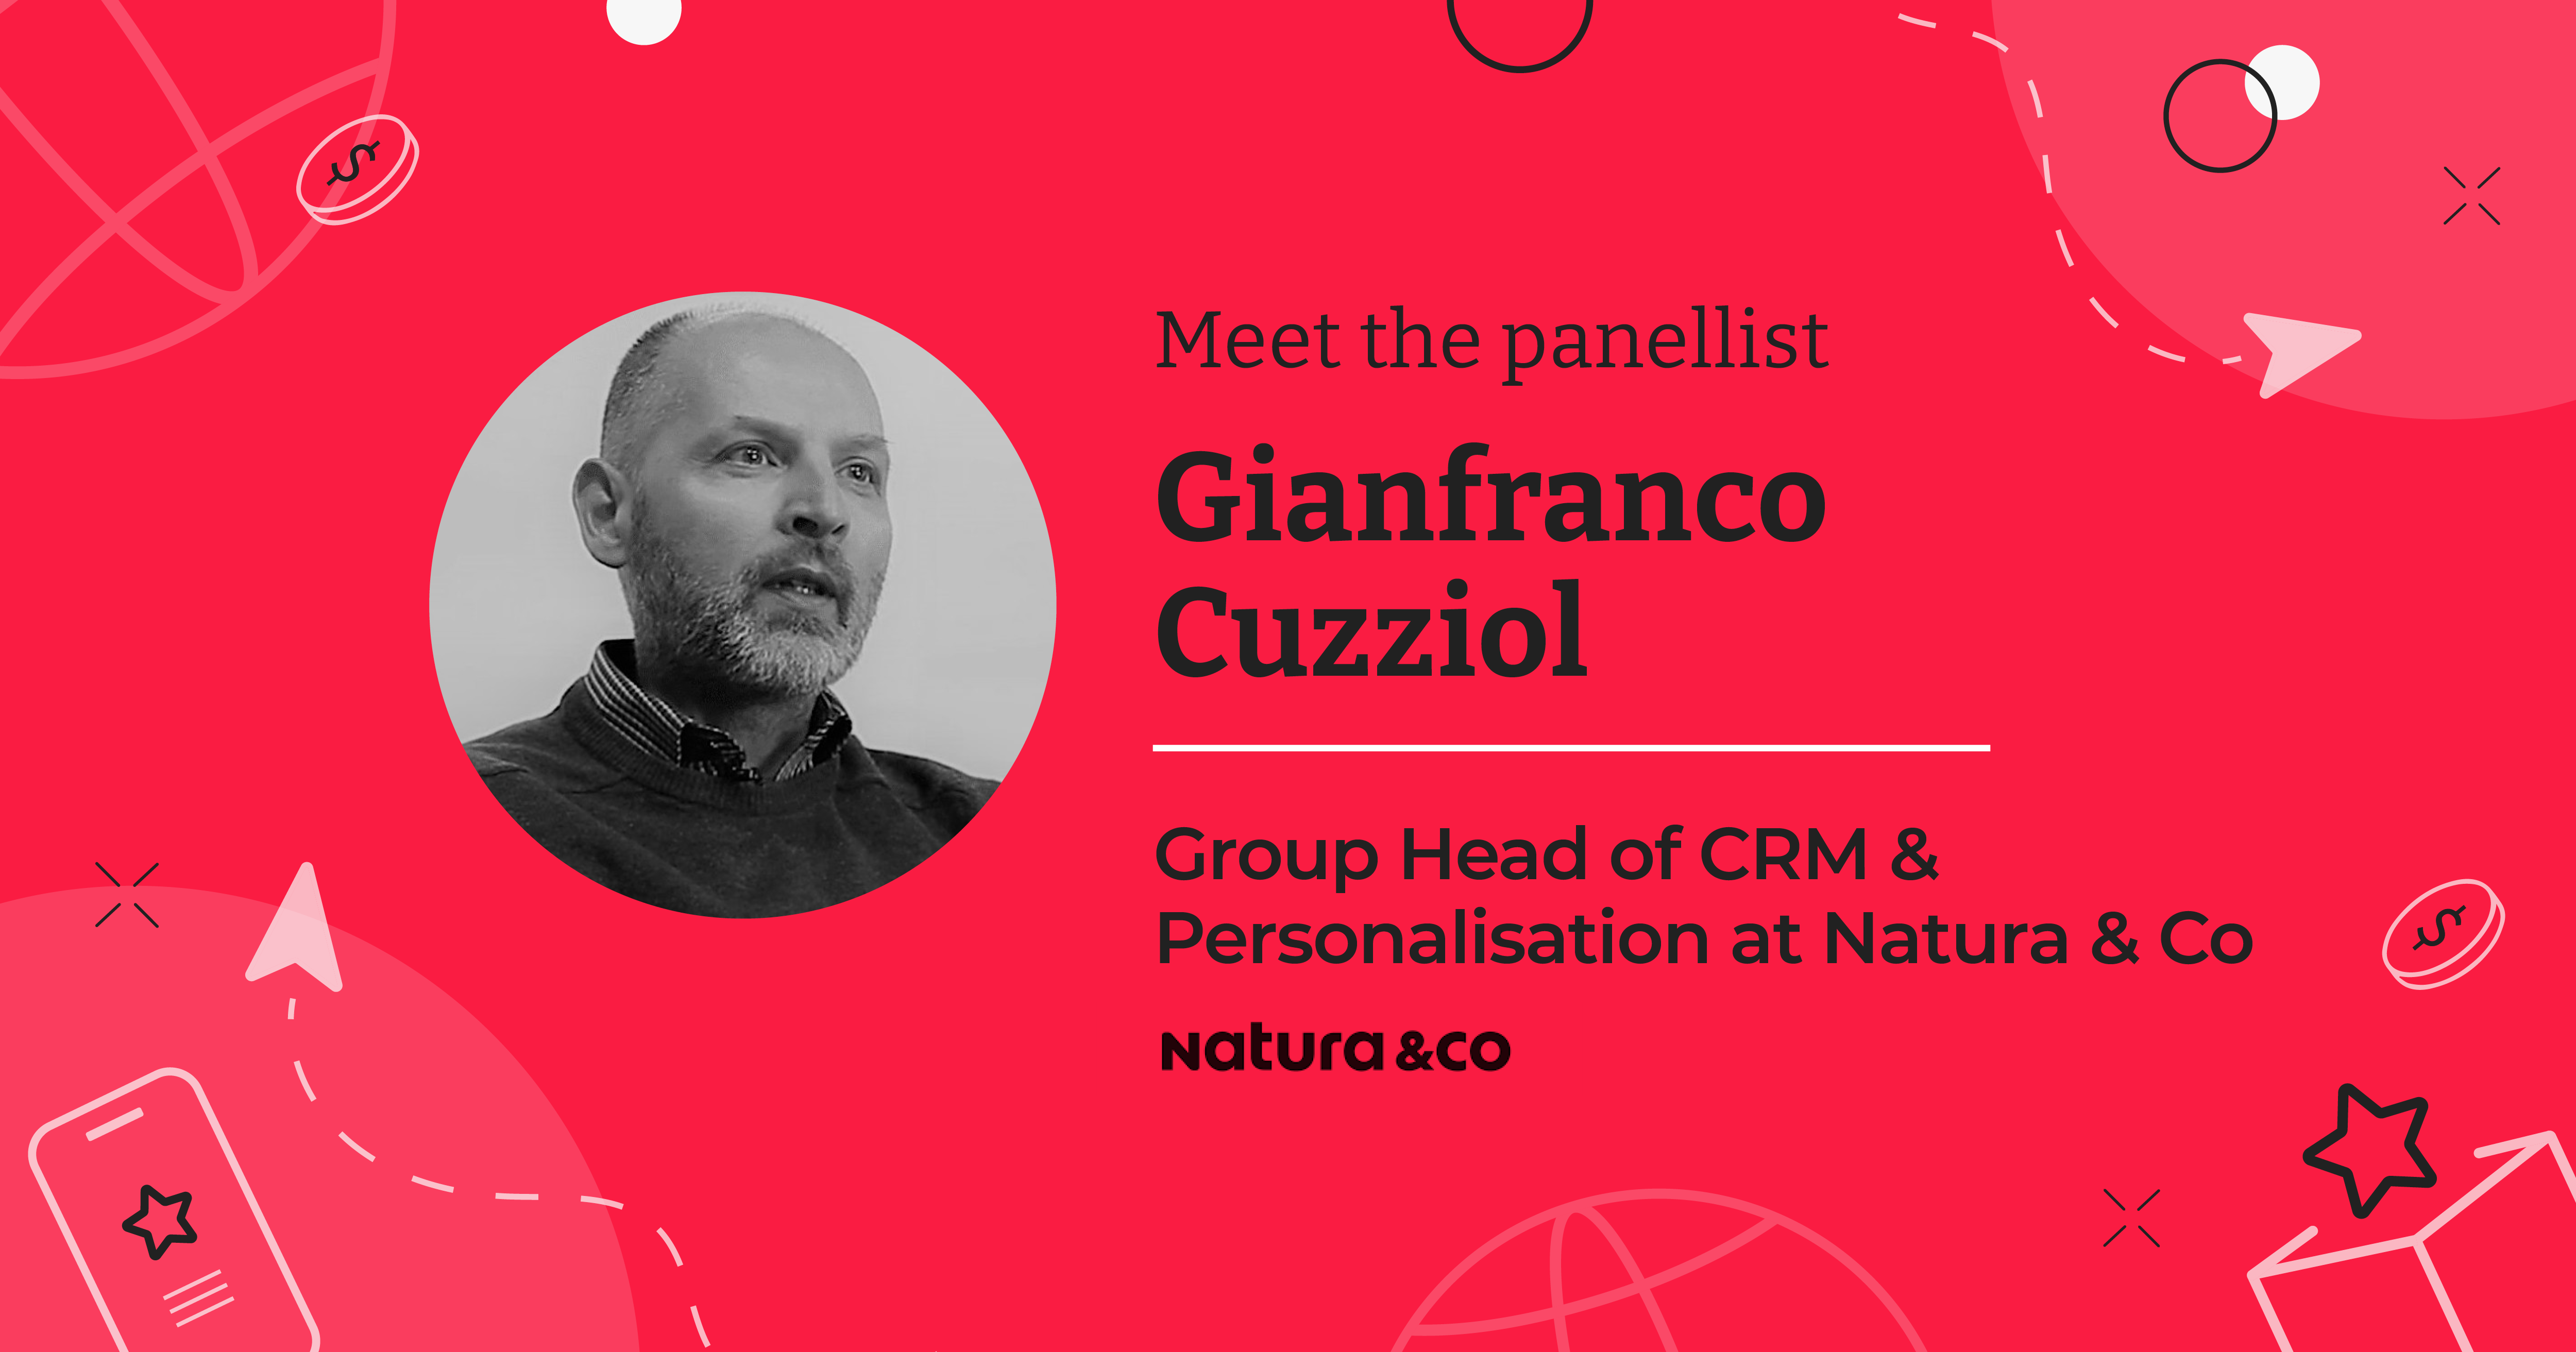 Meet the panellist Gianfranco Cuzziol